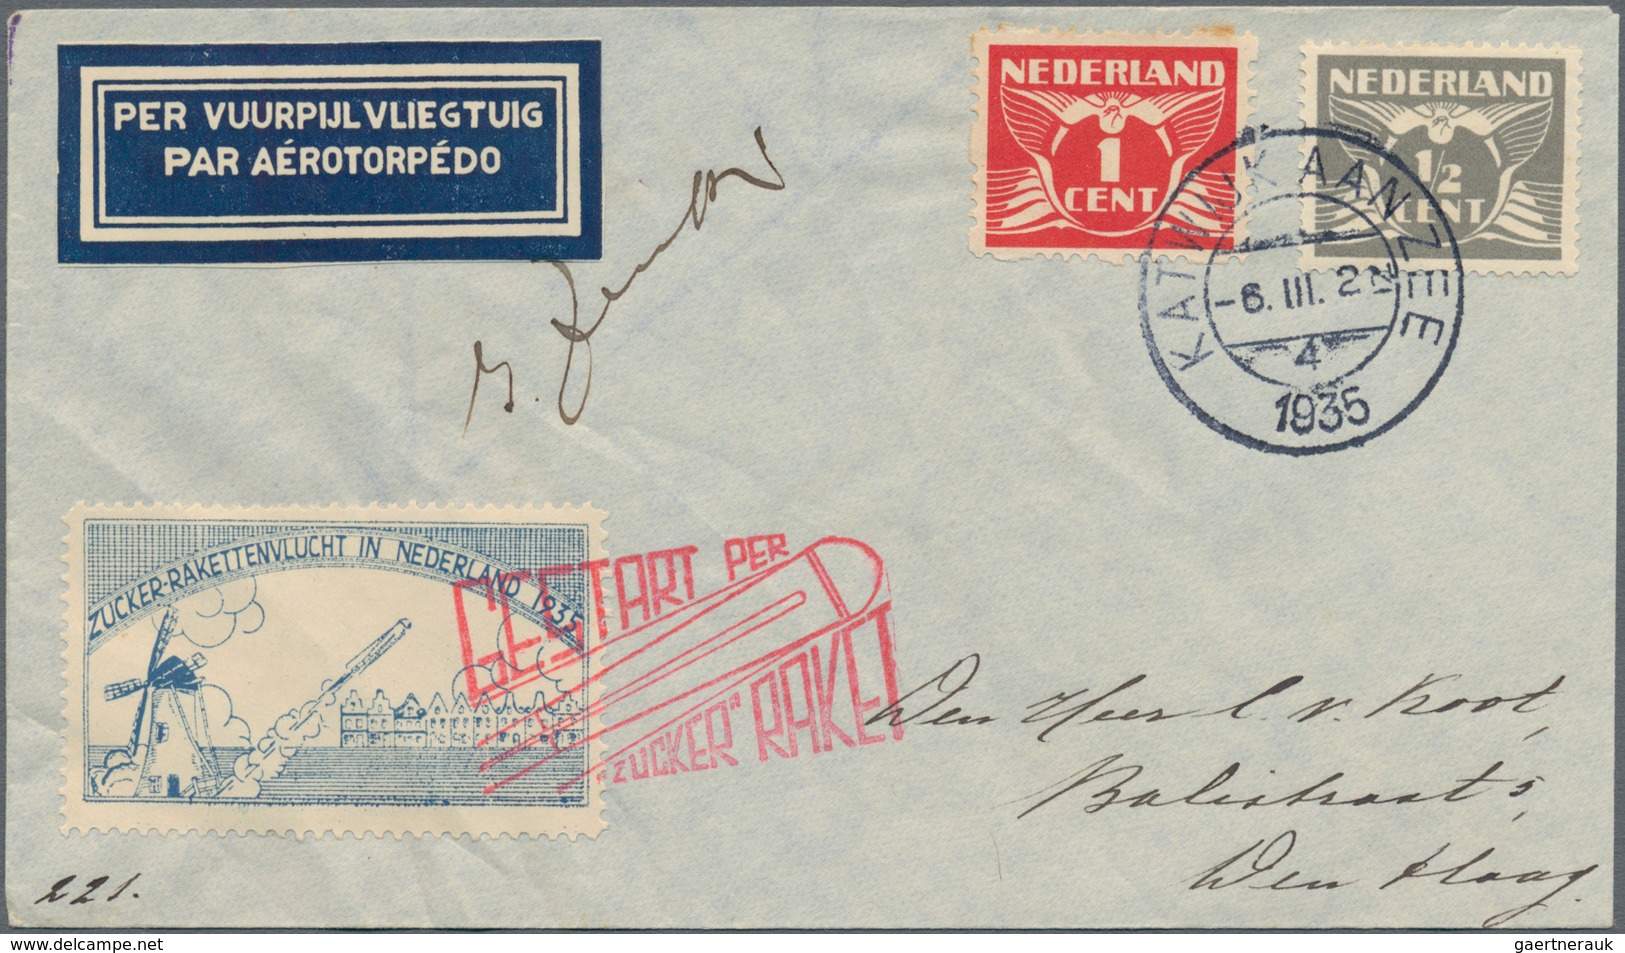 Raketenpost: 1934/1953 Netherlands: 28 covers and cards flown by various Dutch rockets, each describ